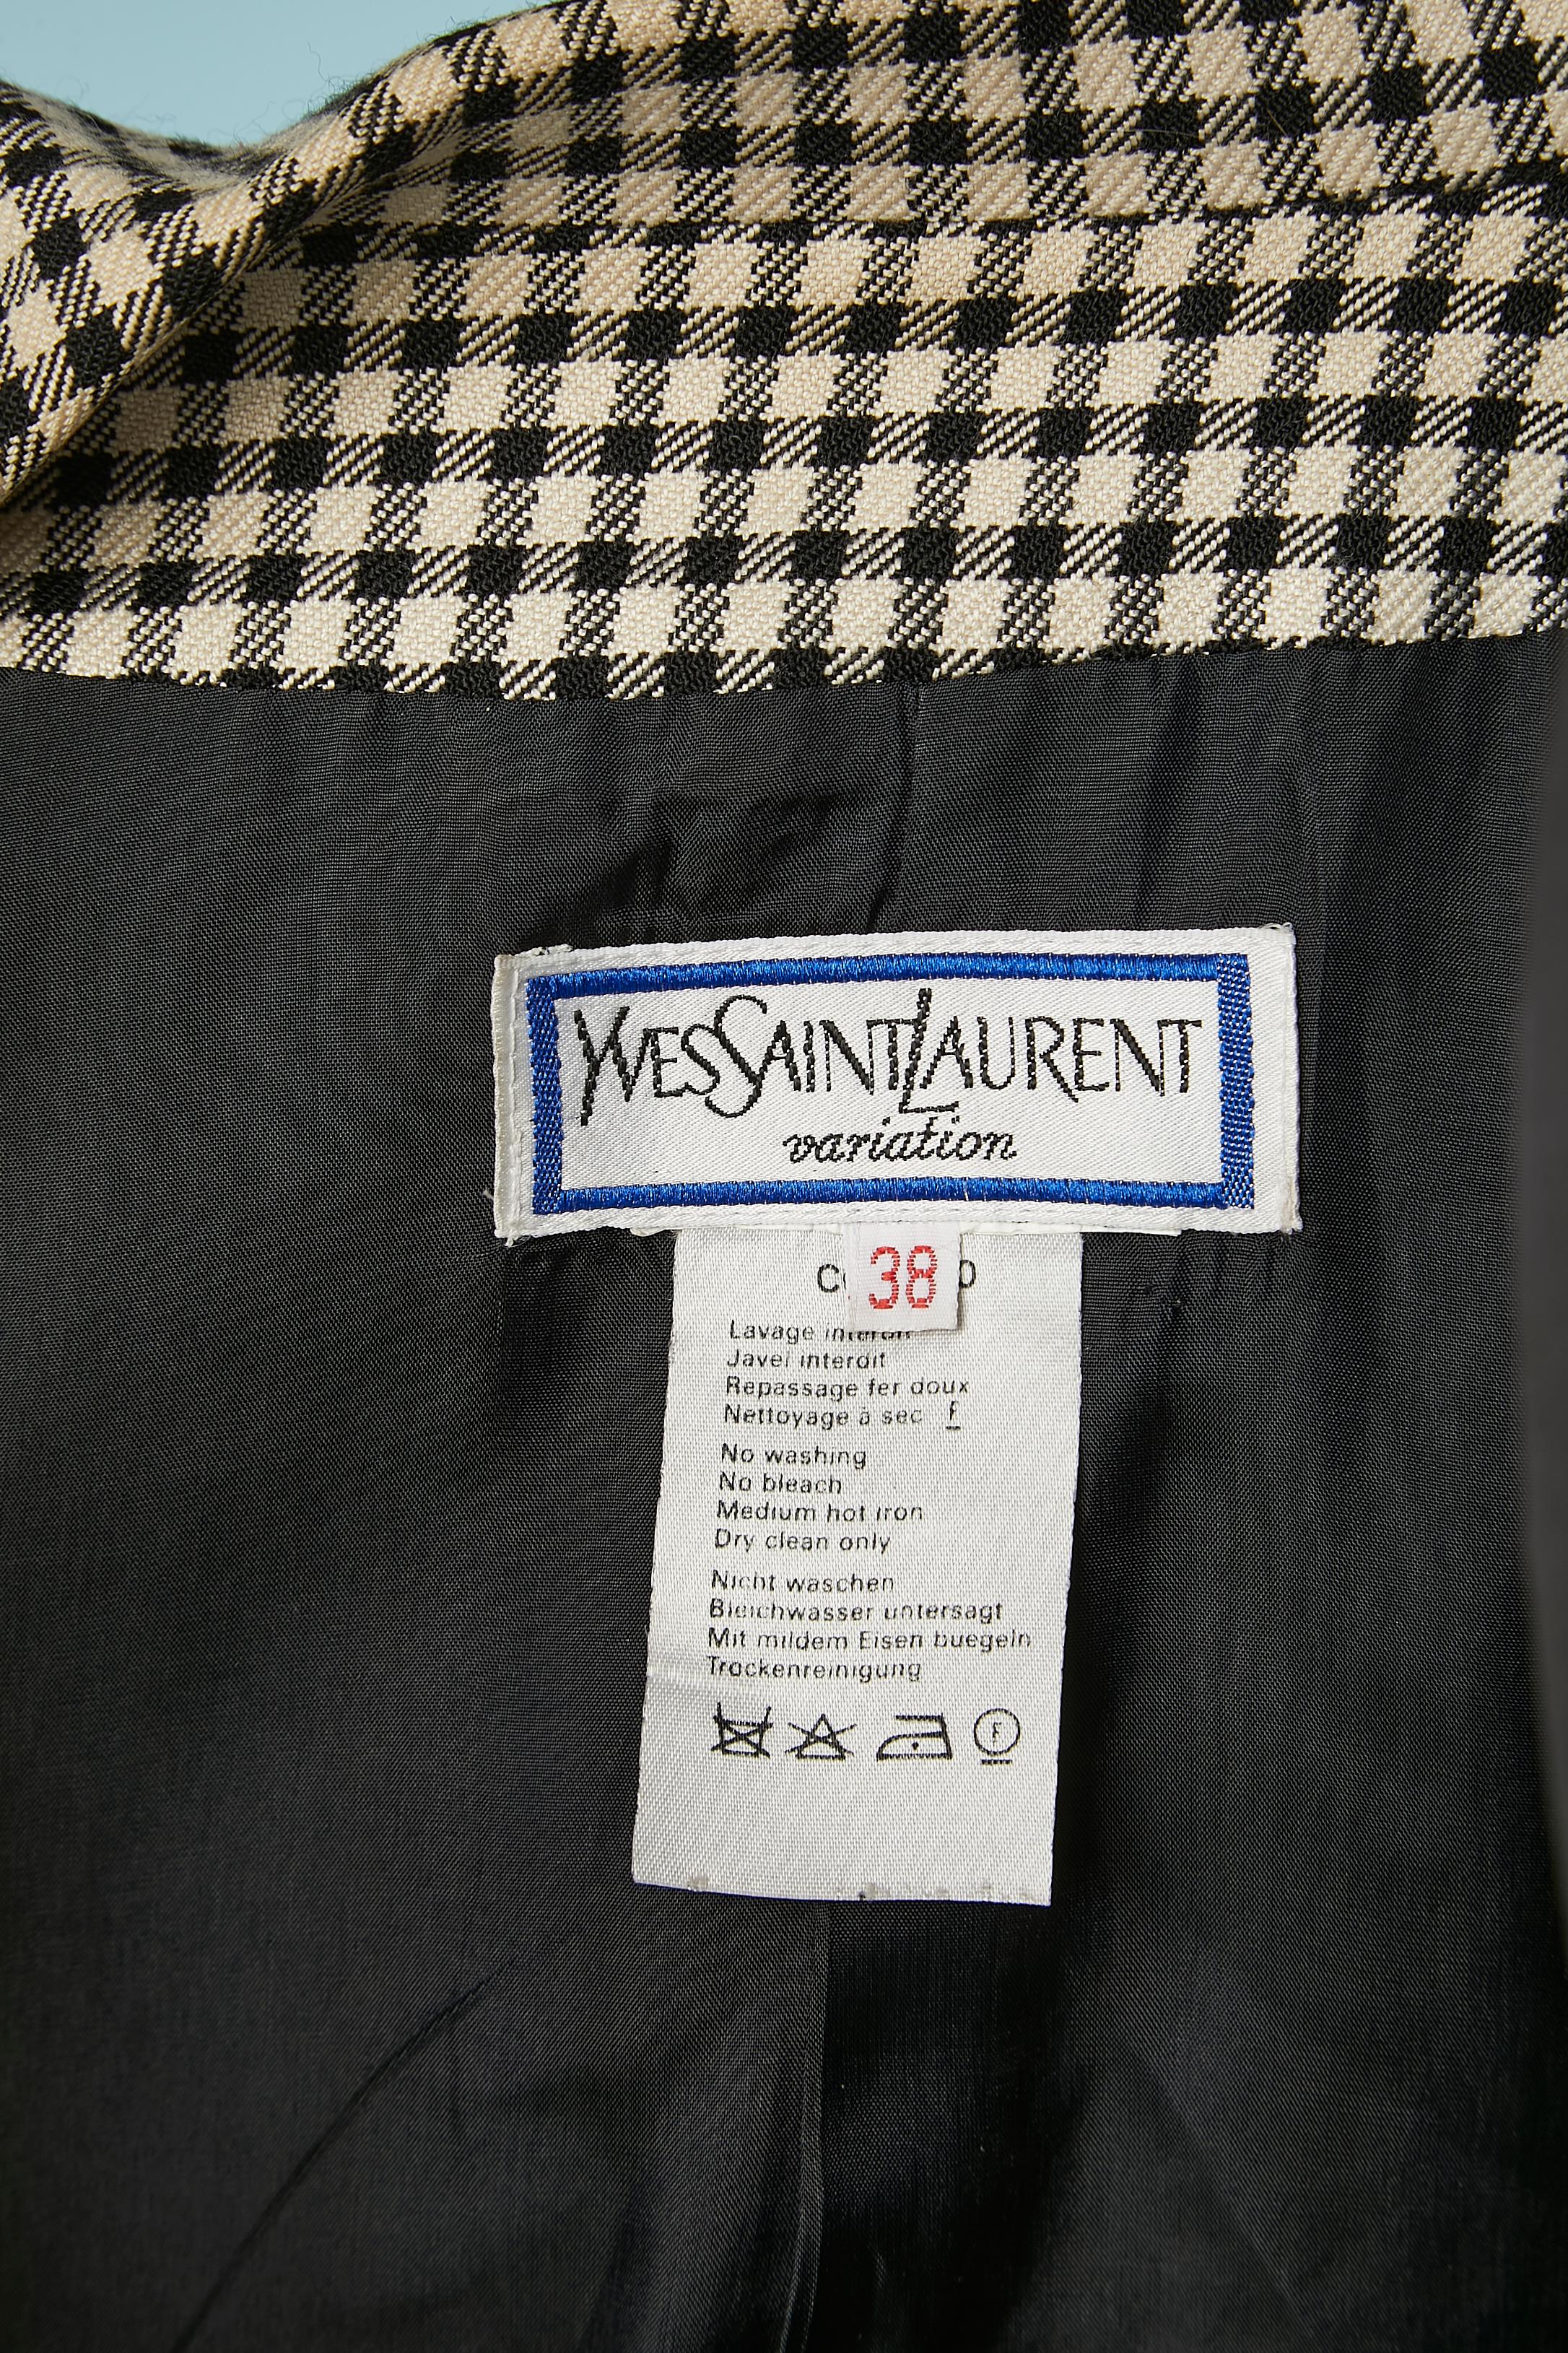 Black and white mini check pattern skirt-suit Yves Saint Laurent Variation  For Sale 3